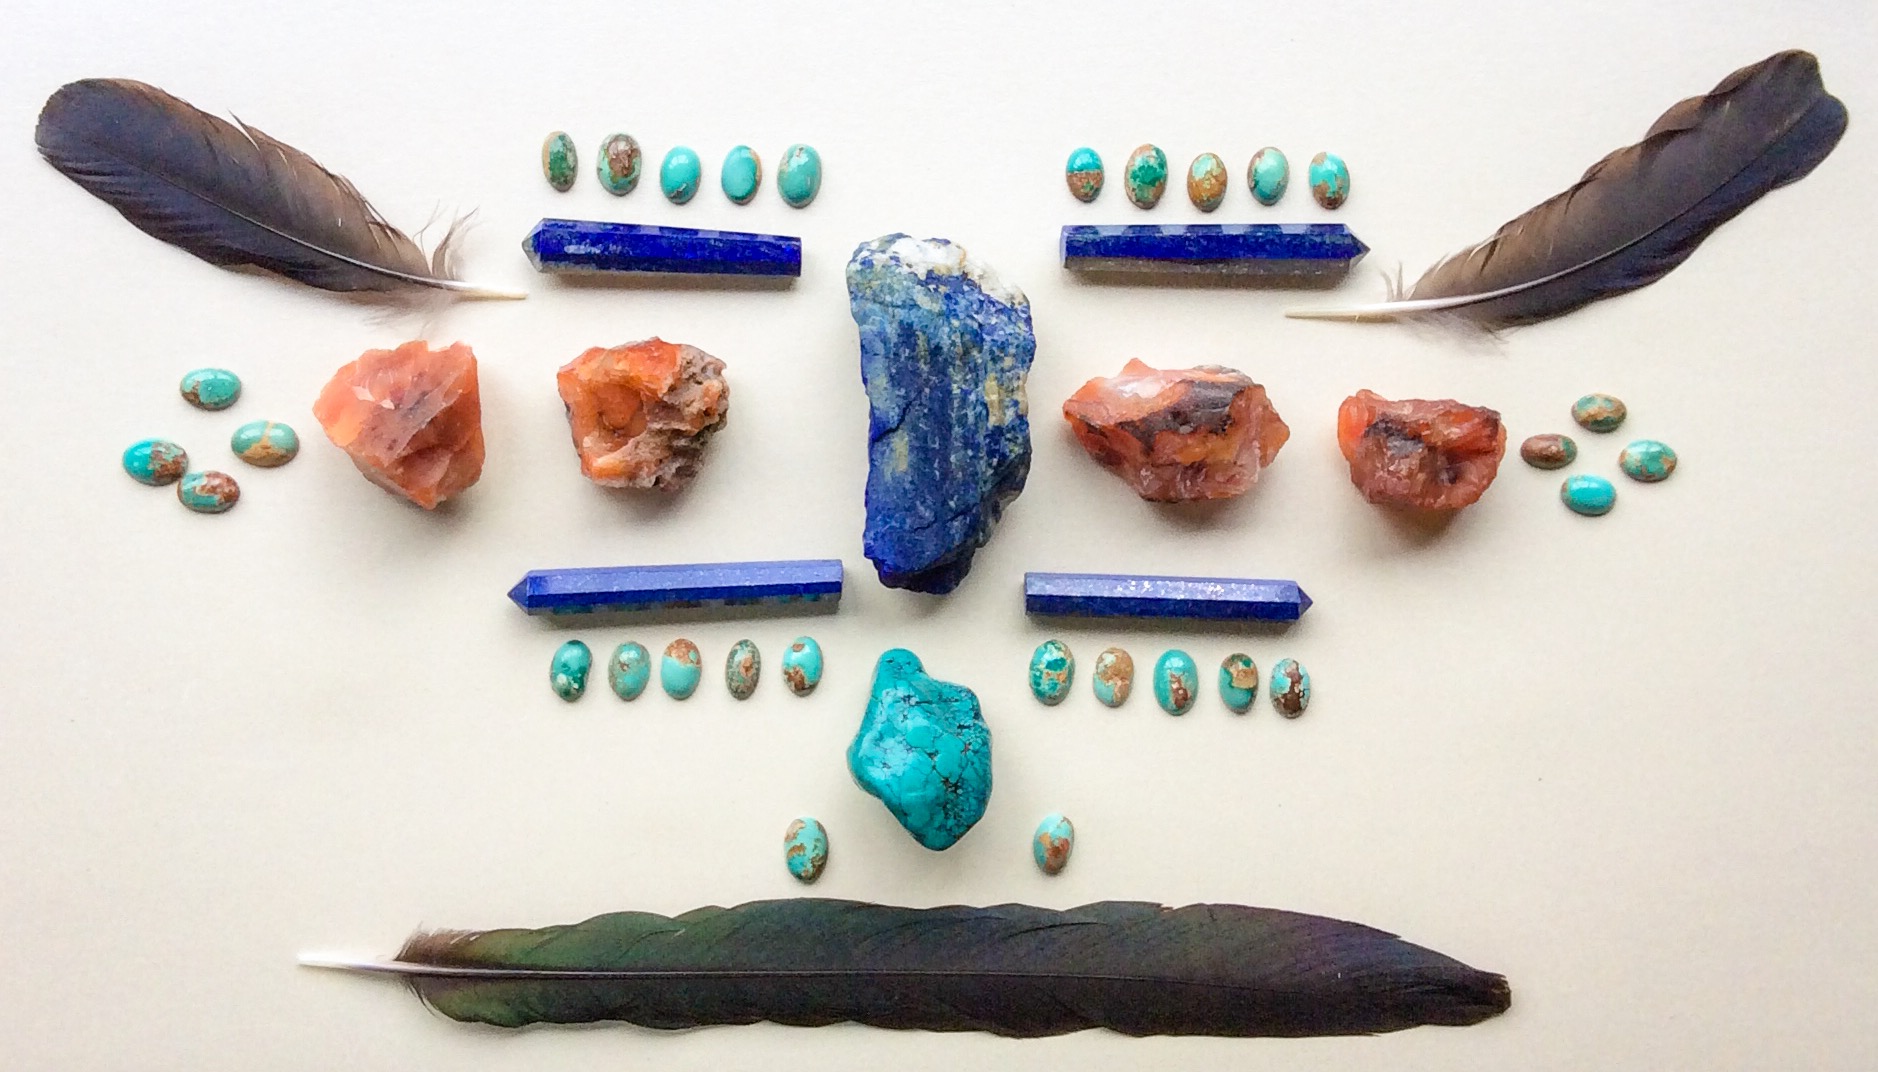 Lapis Lazuli, Carnelian, Turquoise and feathers found